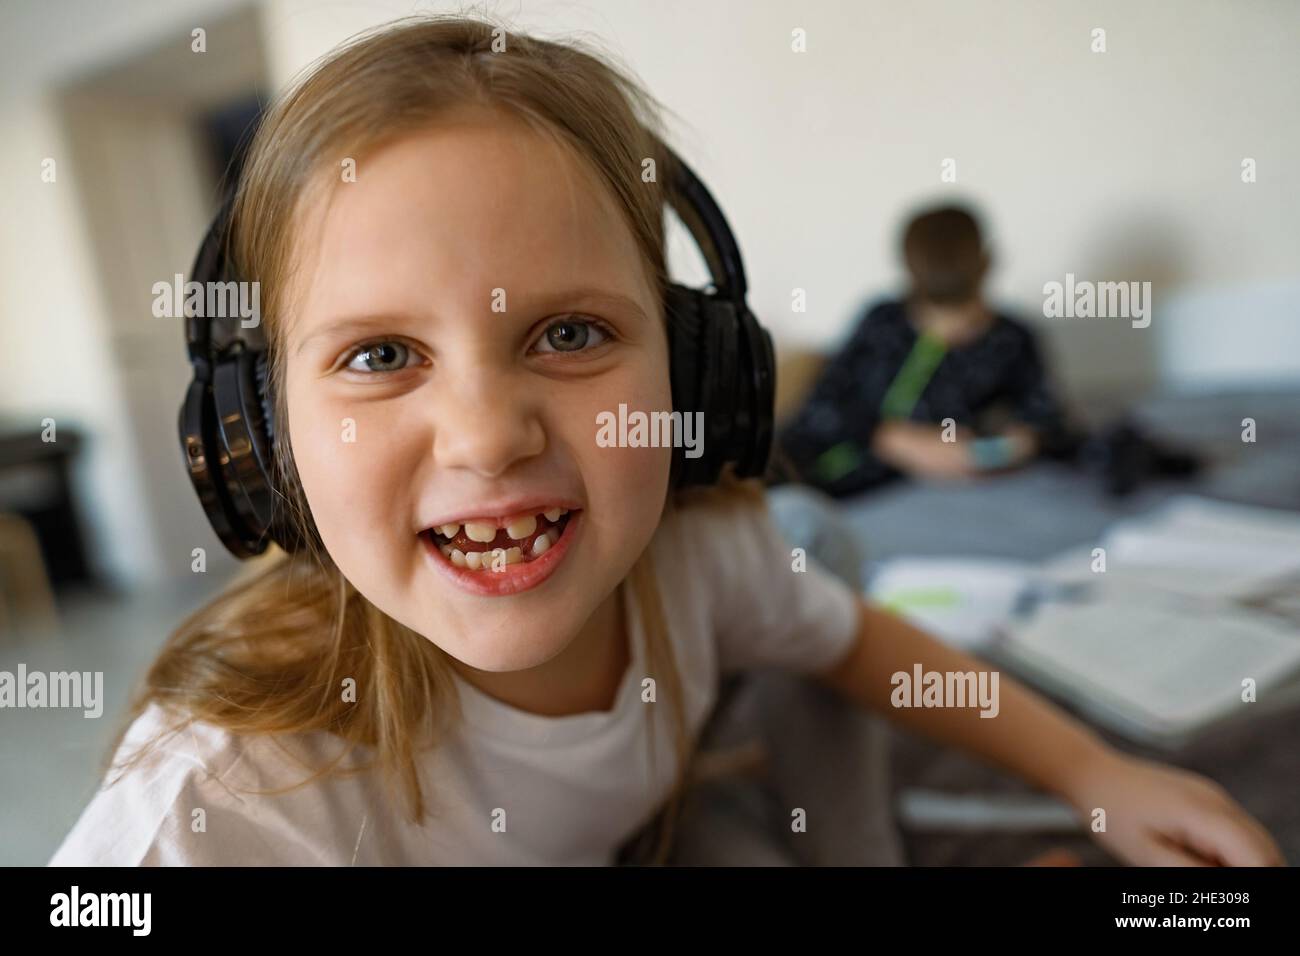 Ggirl in big headphones, smile, growing teeth are visible, fun Stock Photo